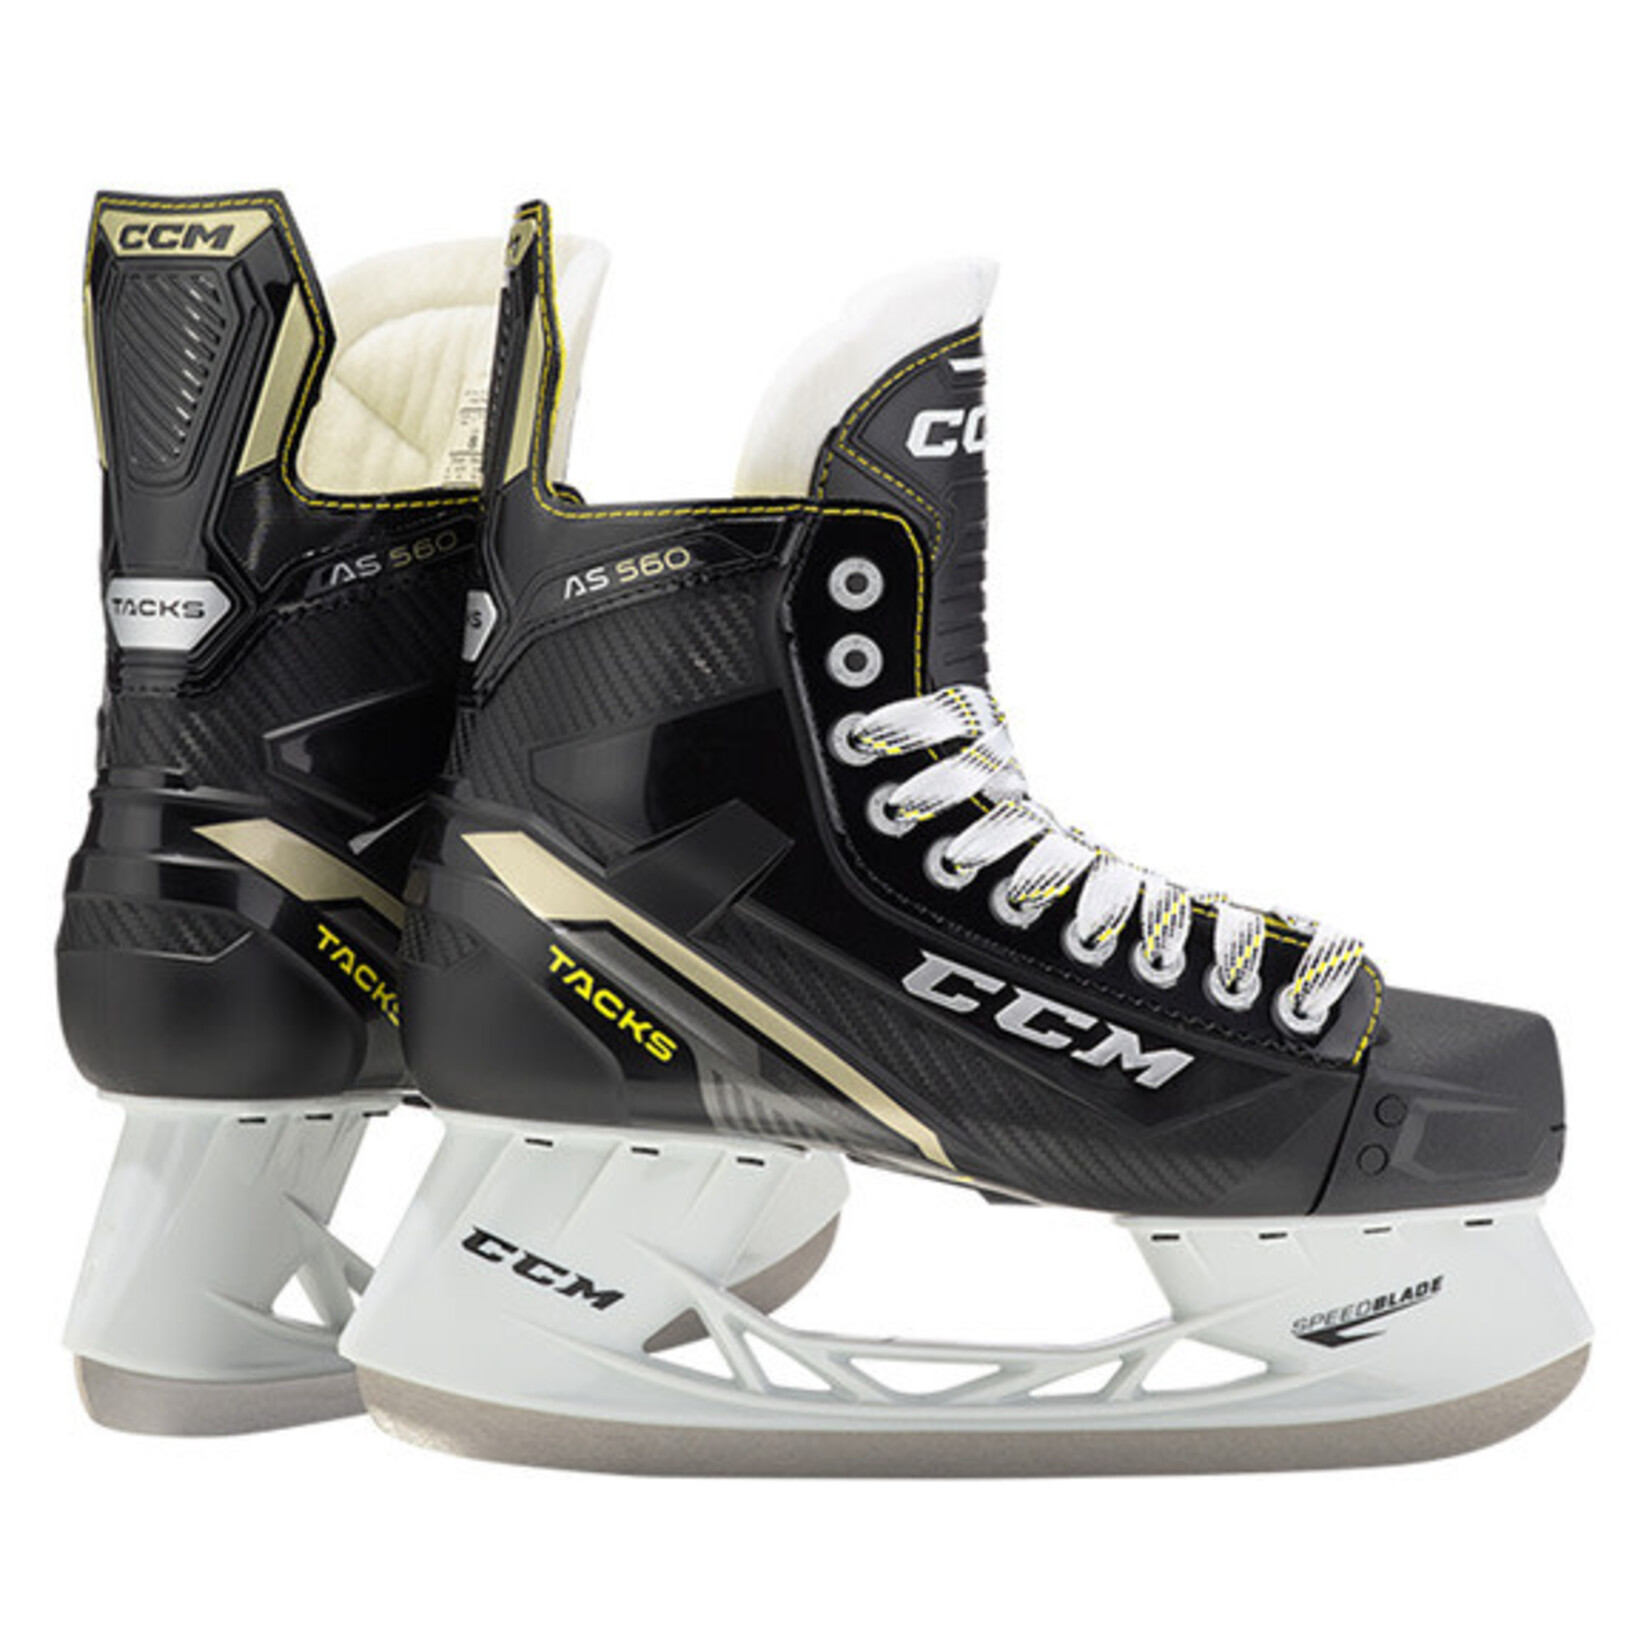 CCM CCM Hockey Skates, Tacks AS-560, Junior